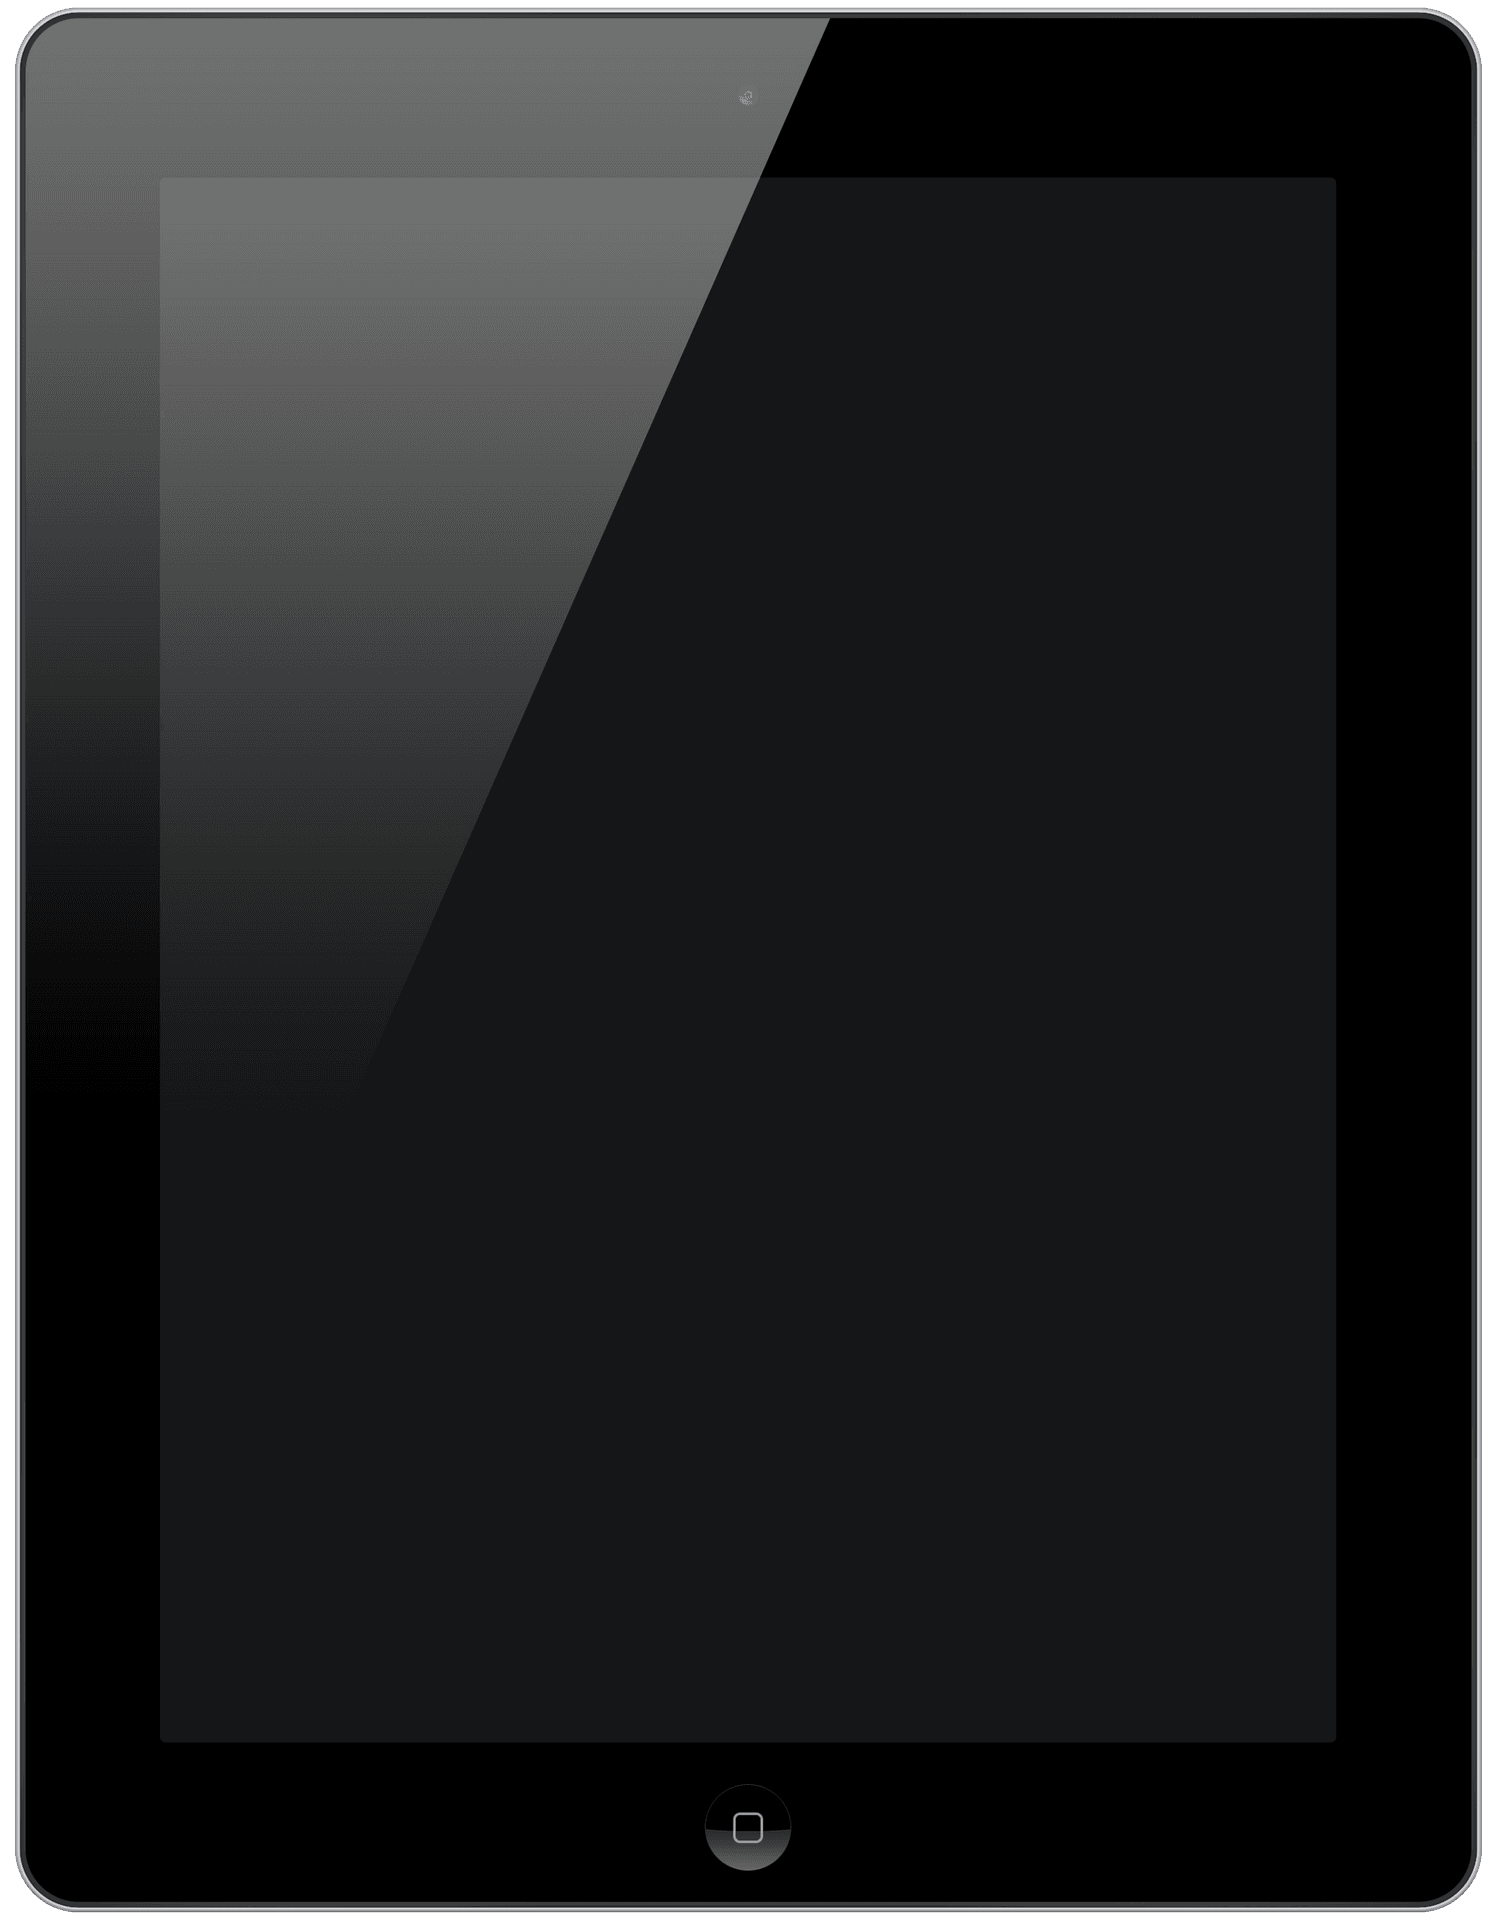 Blacki Pad Vertical Orientation PNG image